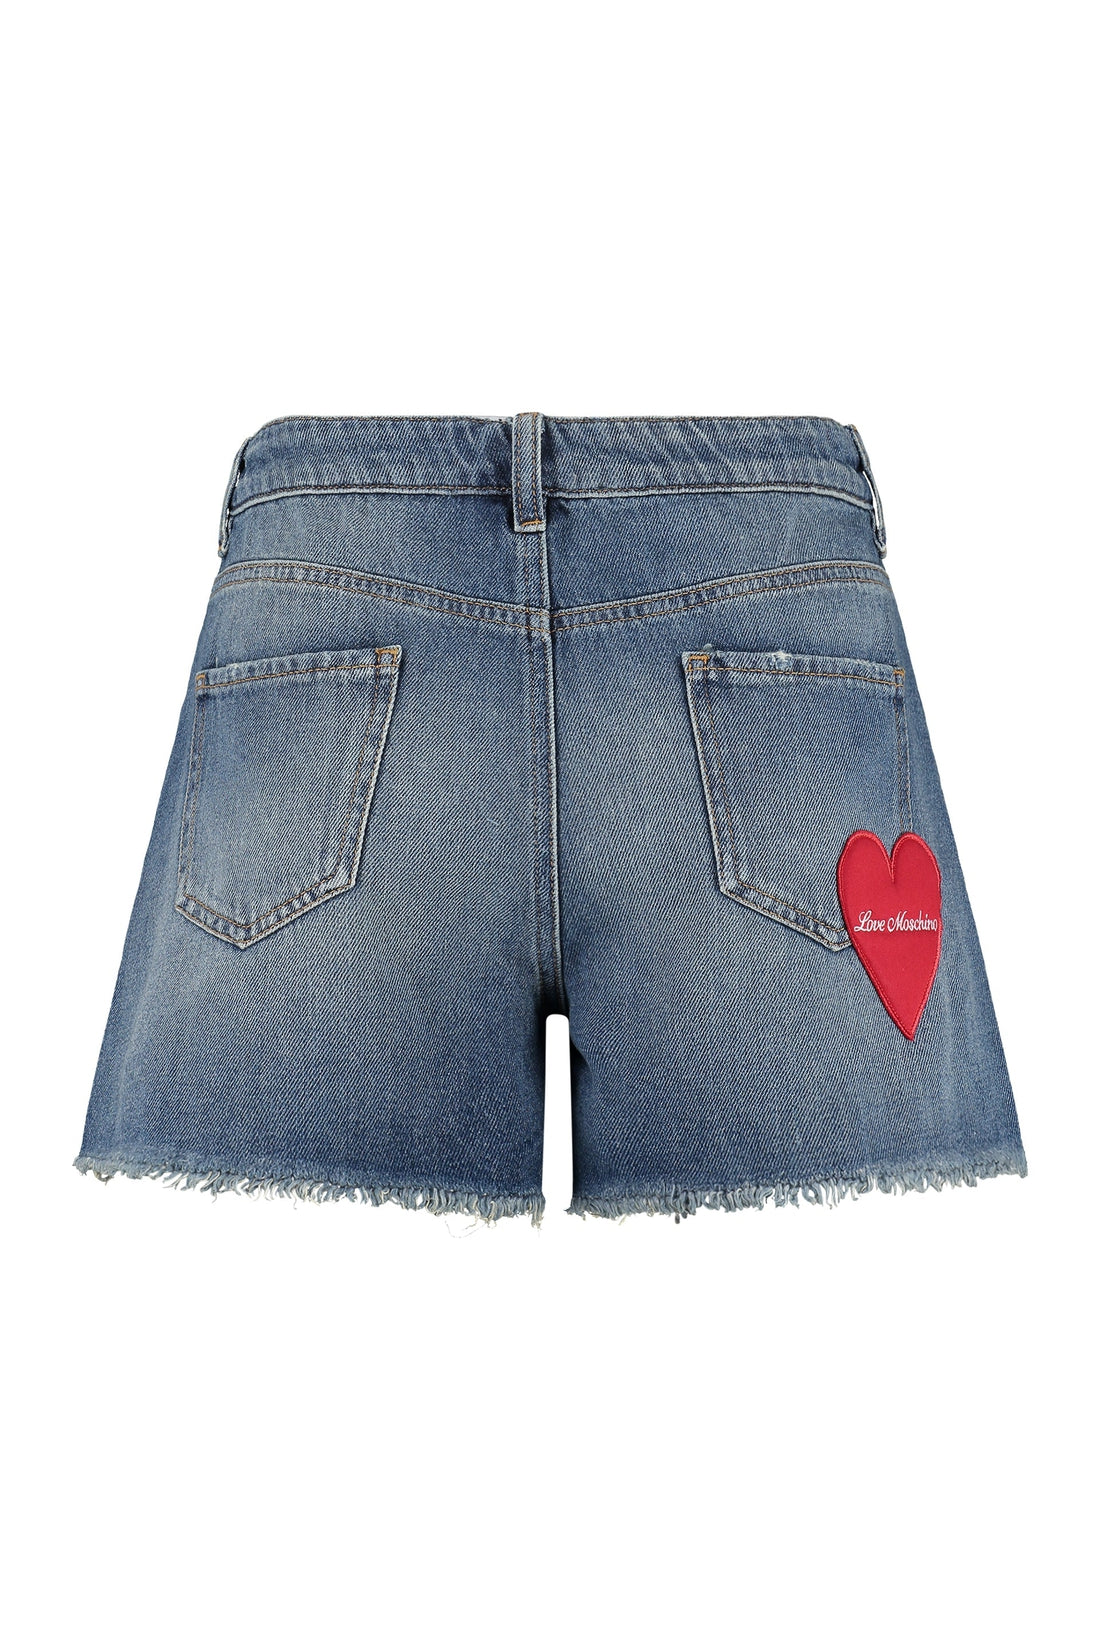 Love Moschino-OUTLET-SALE-Denim shorts-ARCHIVIST